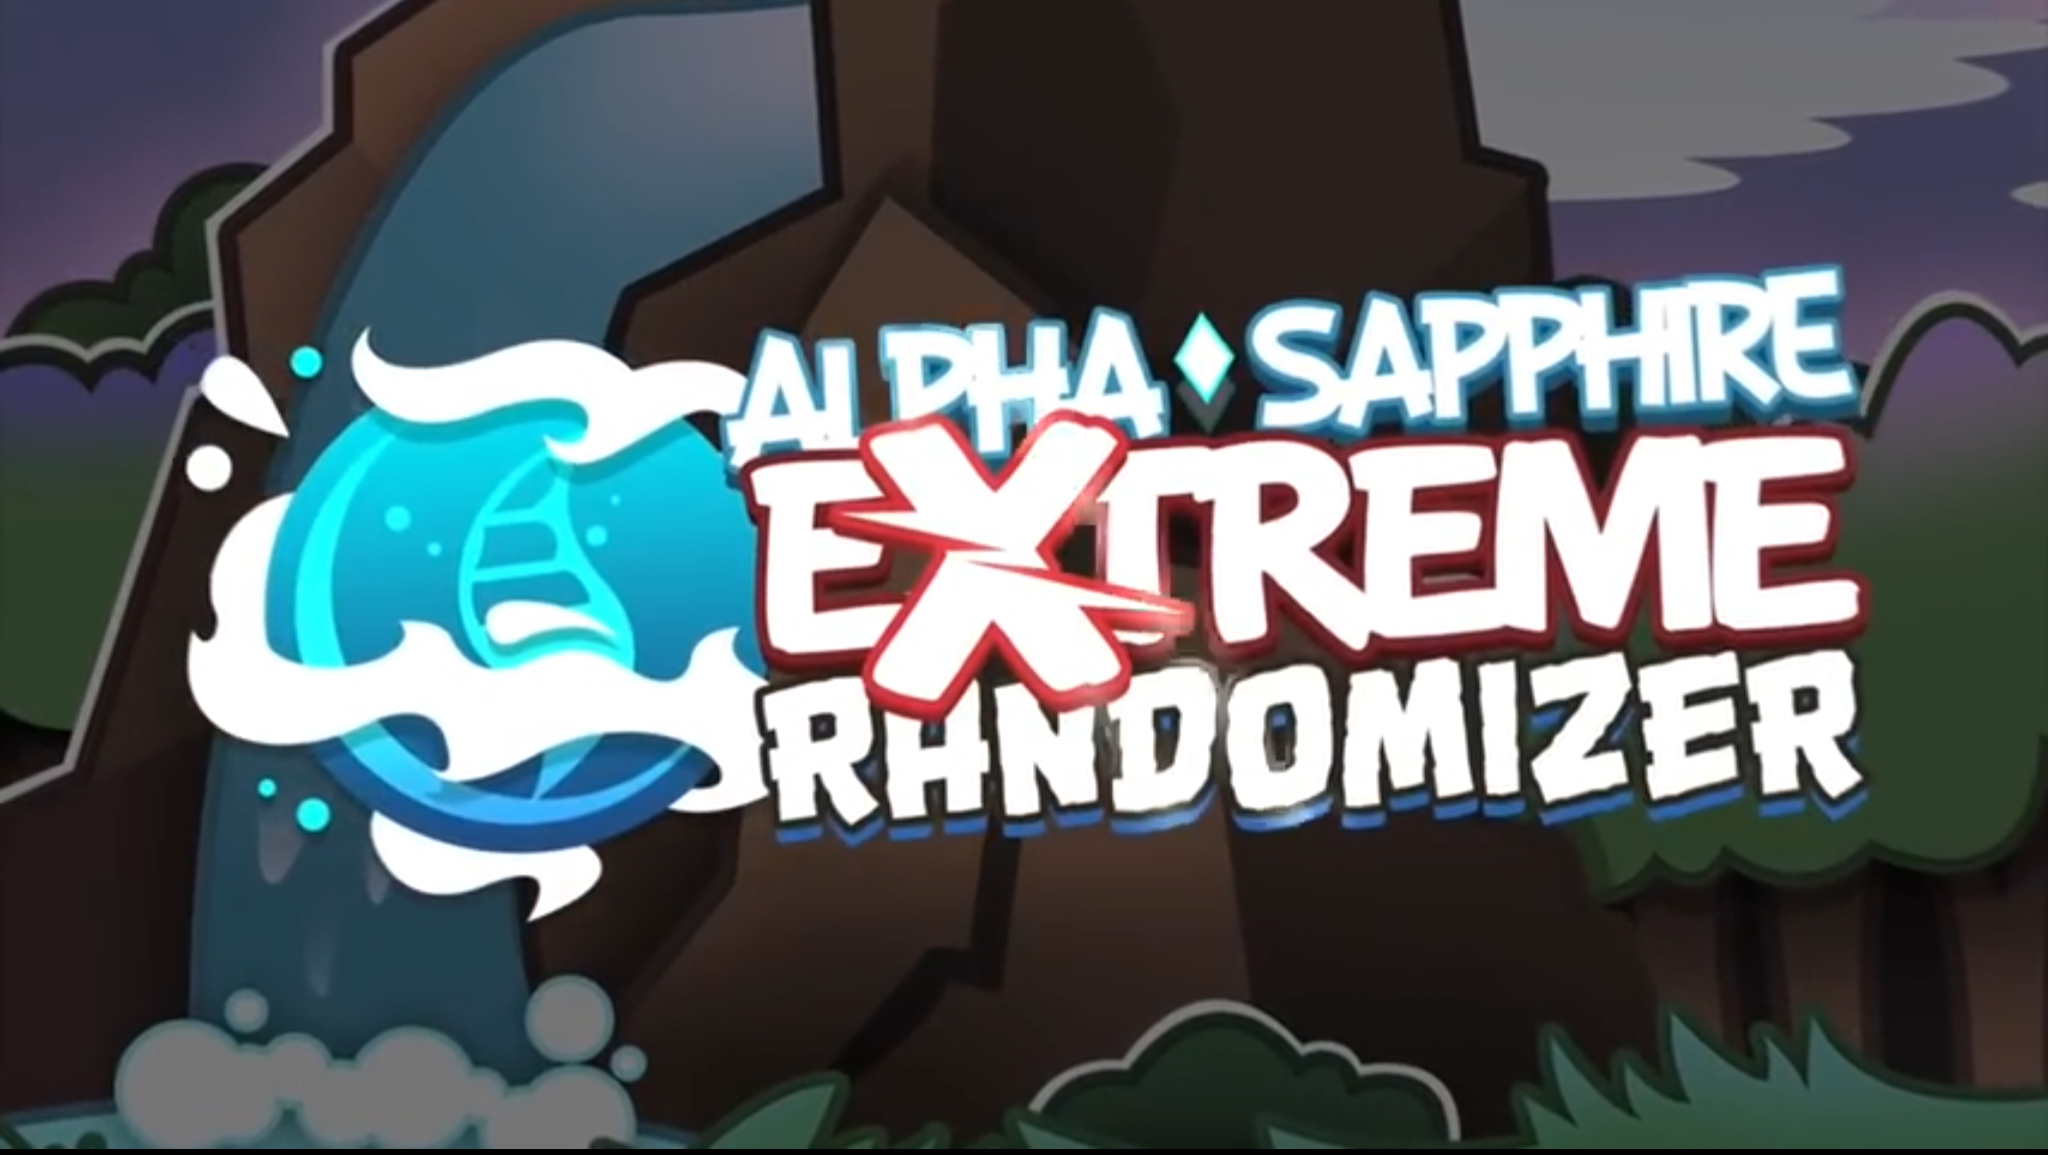 Pokémon Alpha Sapphire Extreme Randomizer